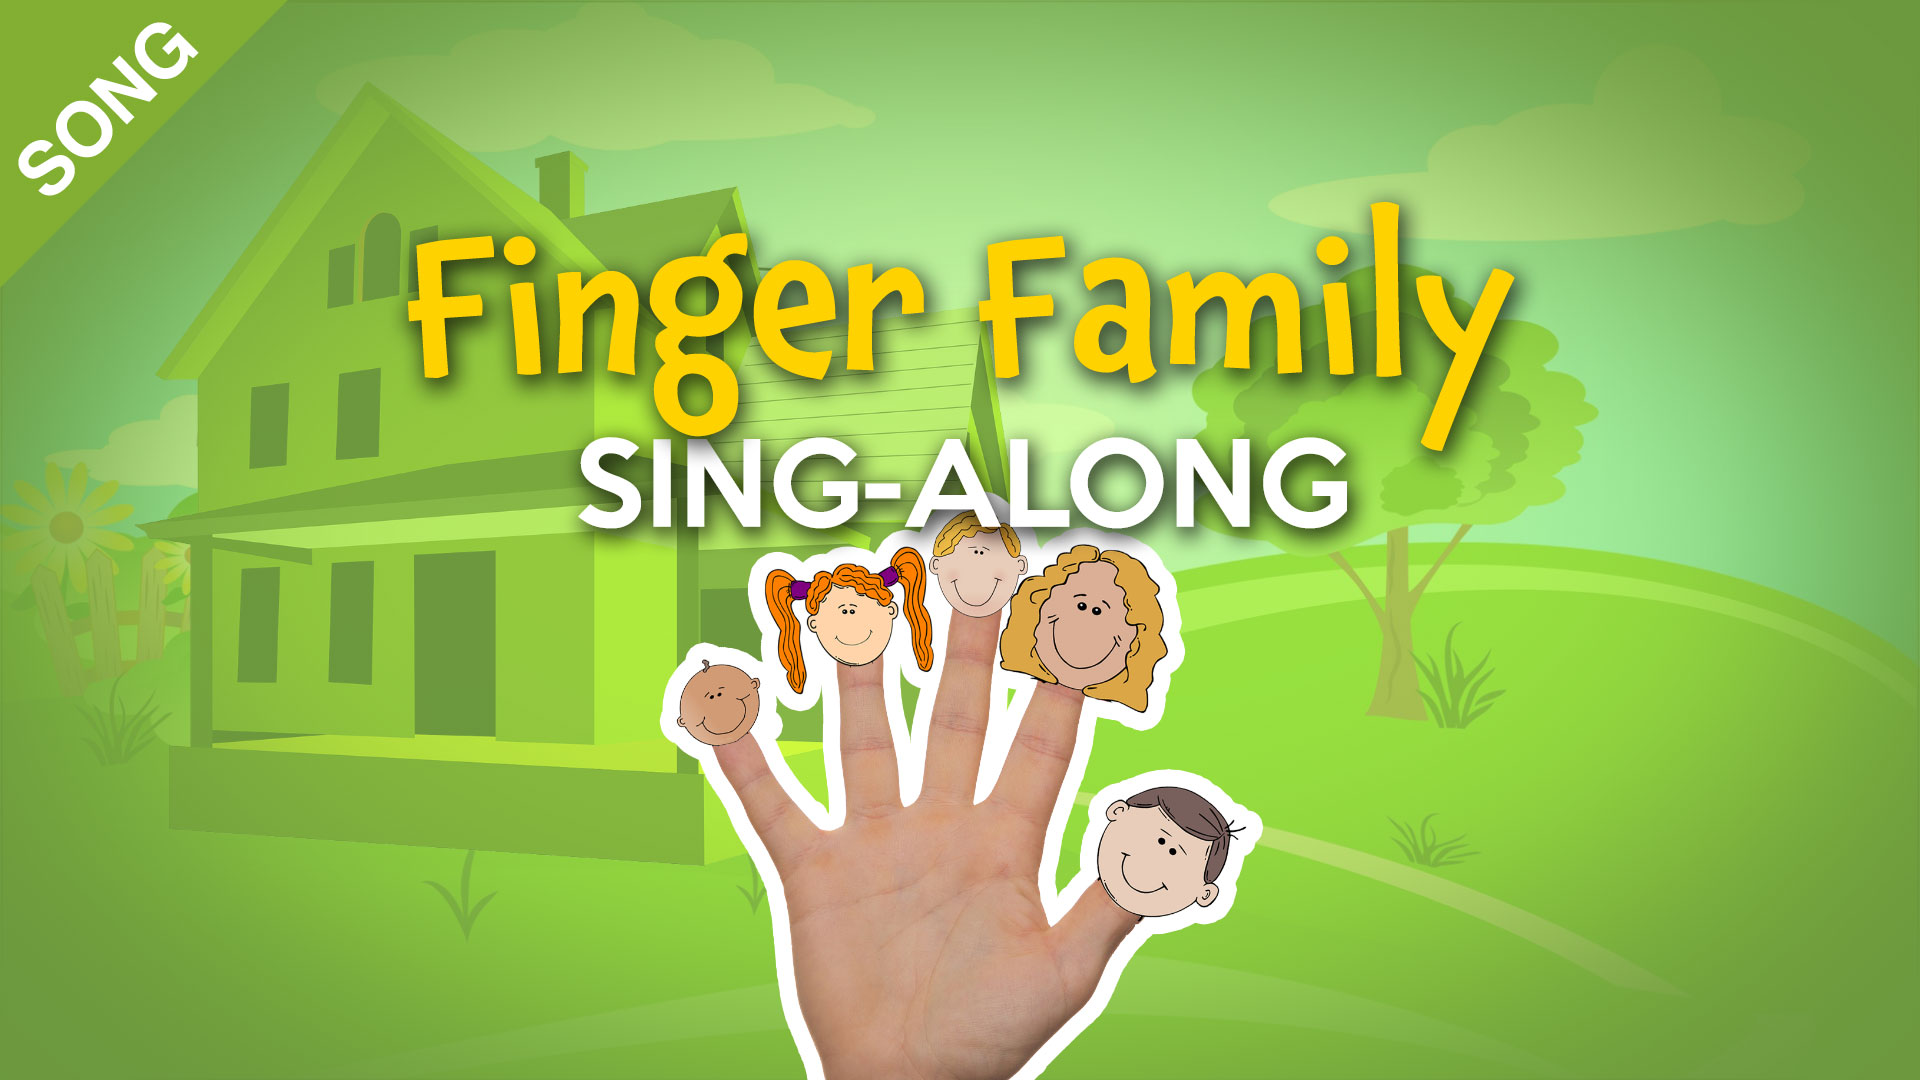 Finger Family Song Original Version Family Sing Daddy finger along голубой. Family sing